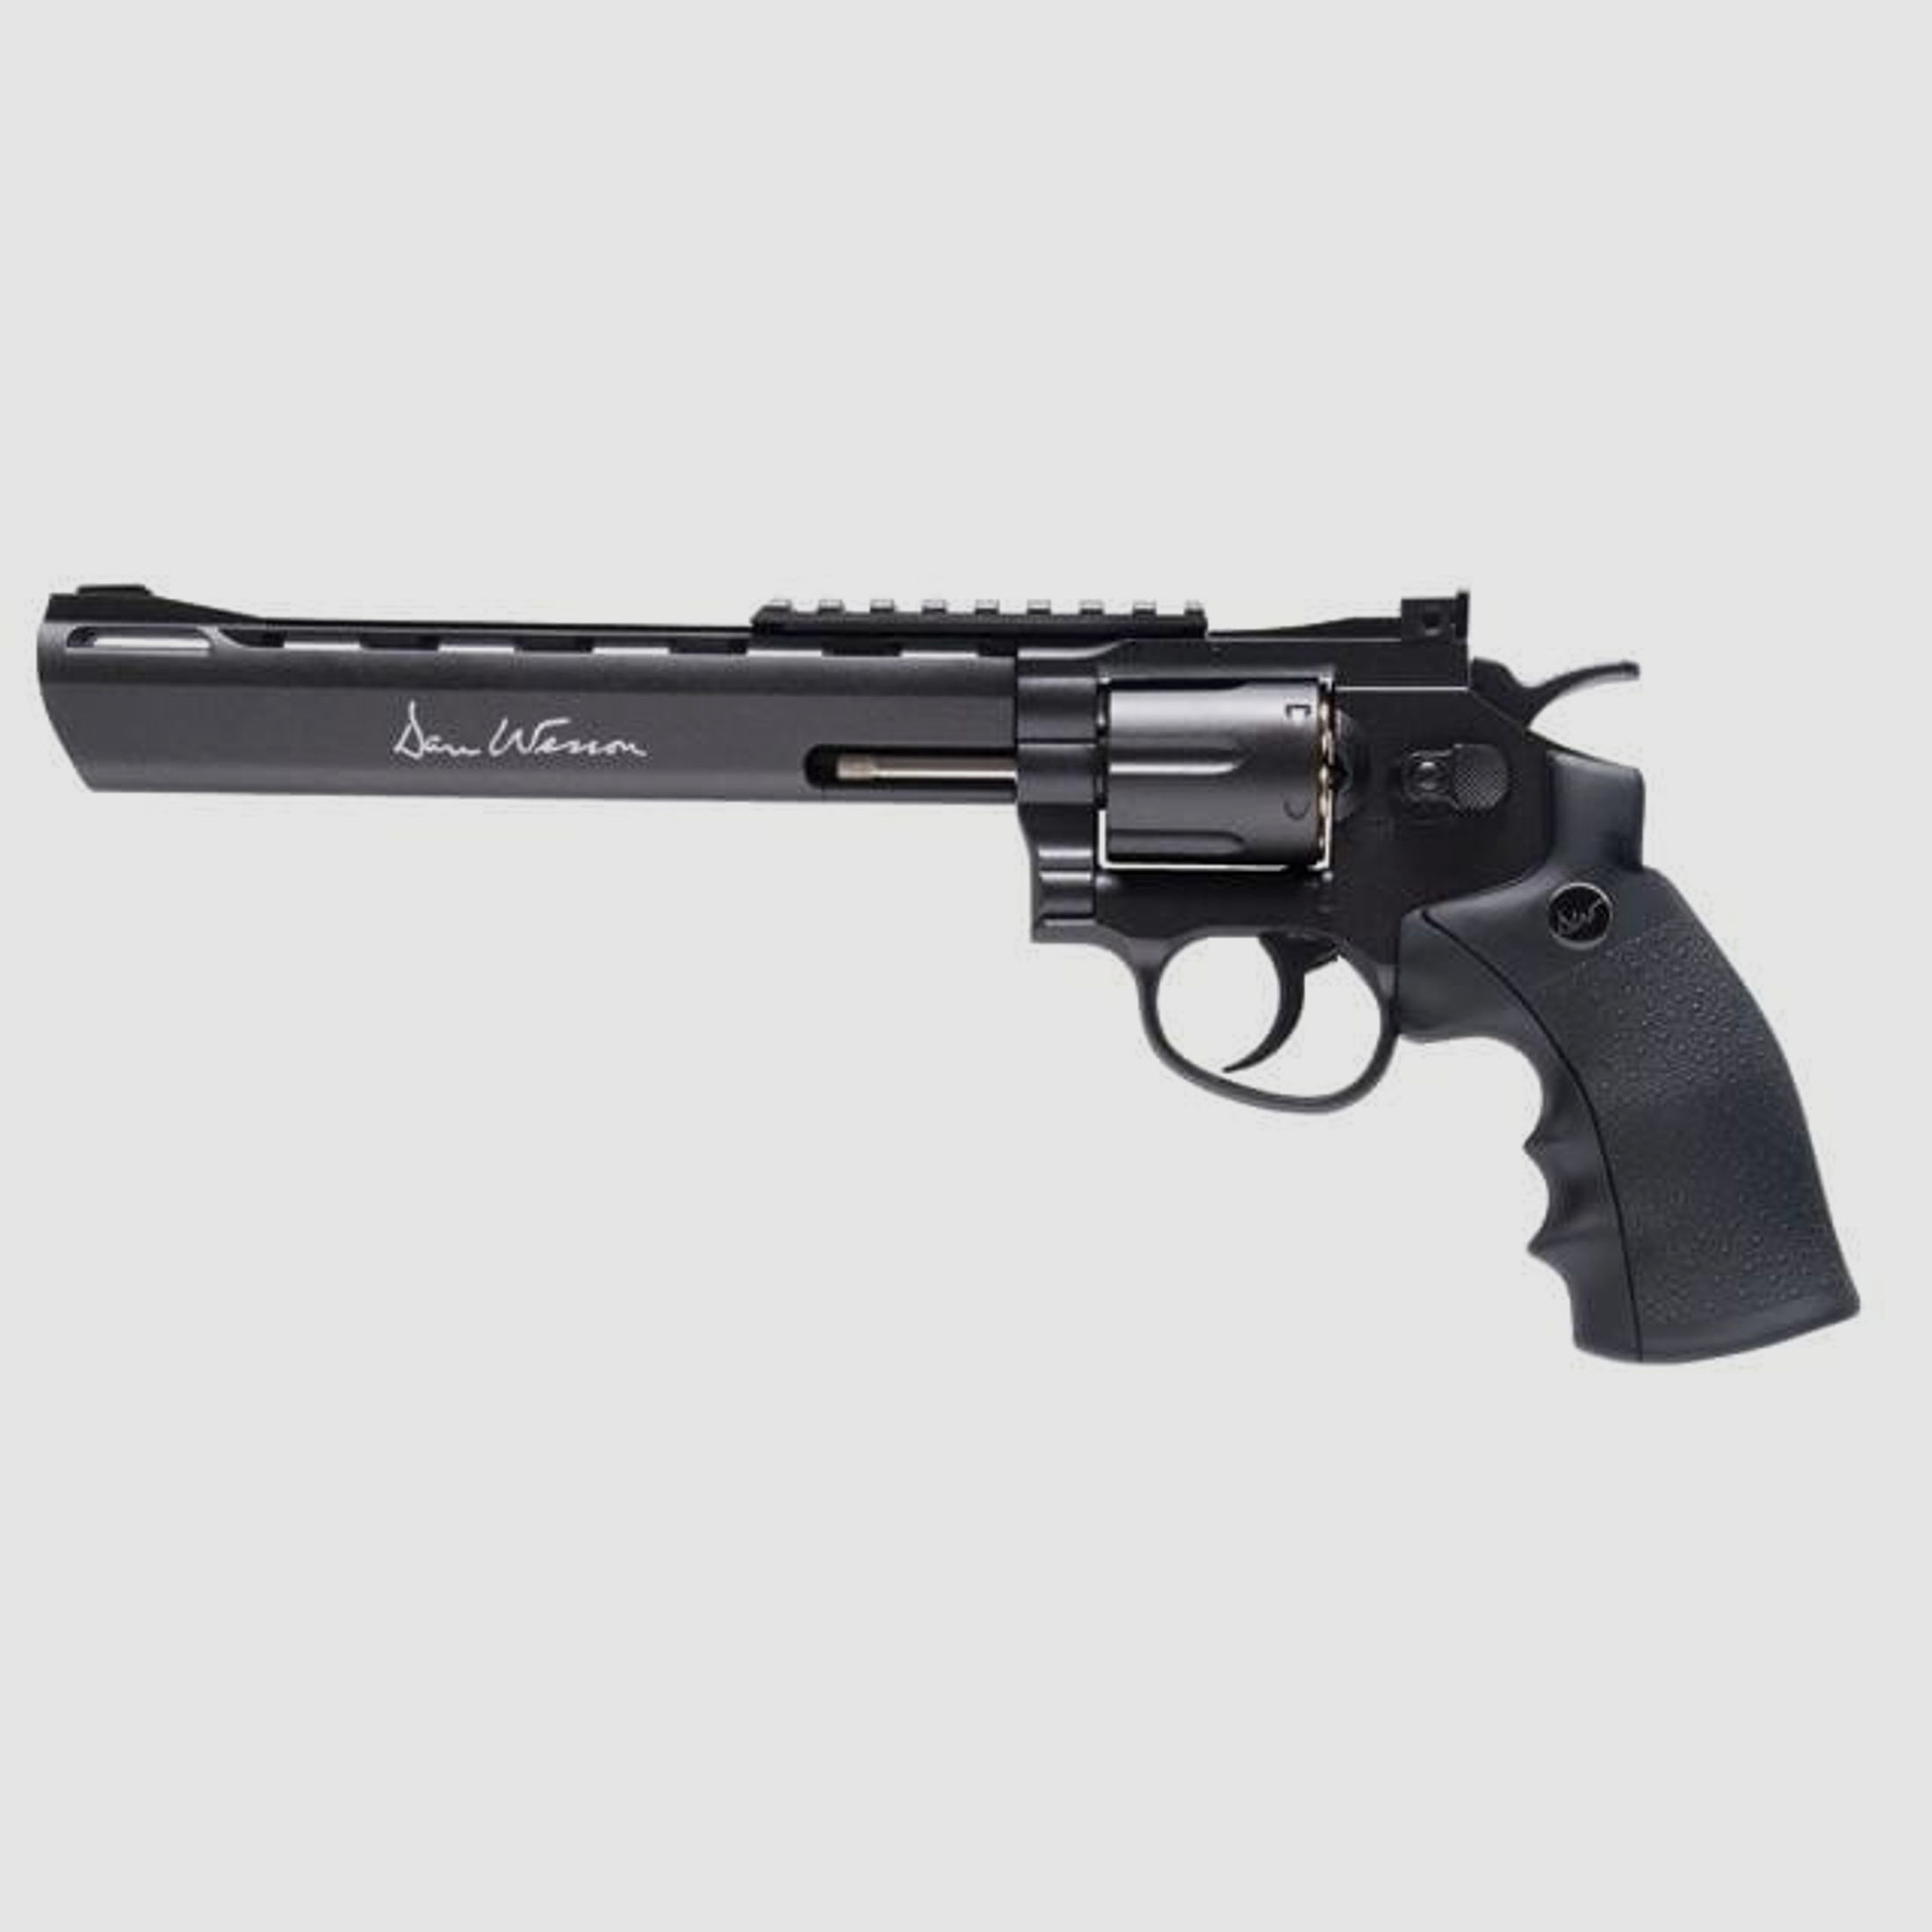 Dan Wesson 8' Luftdruck Revolver 4,5 mm